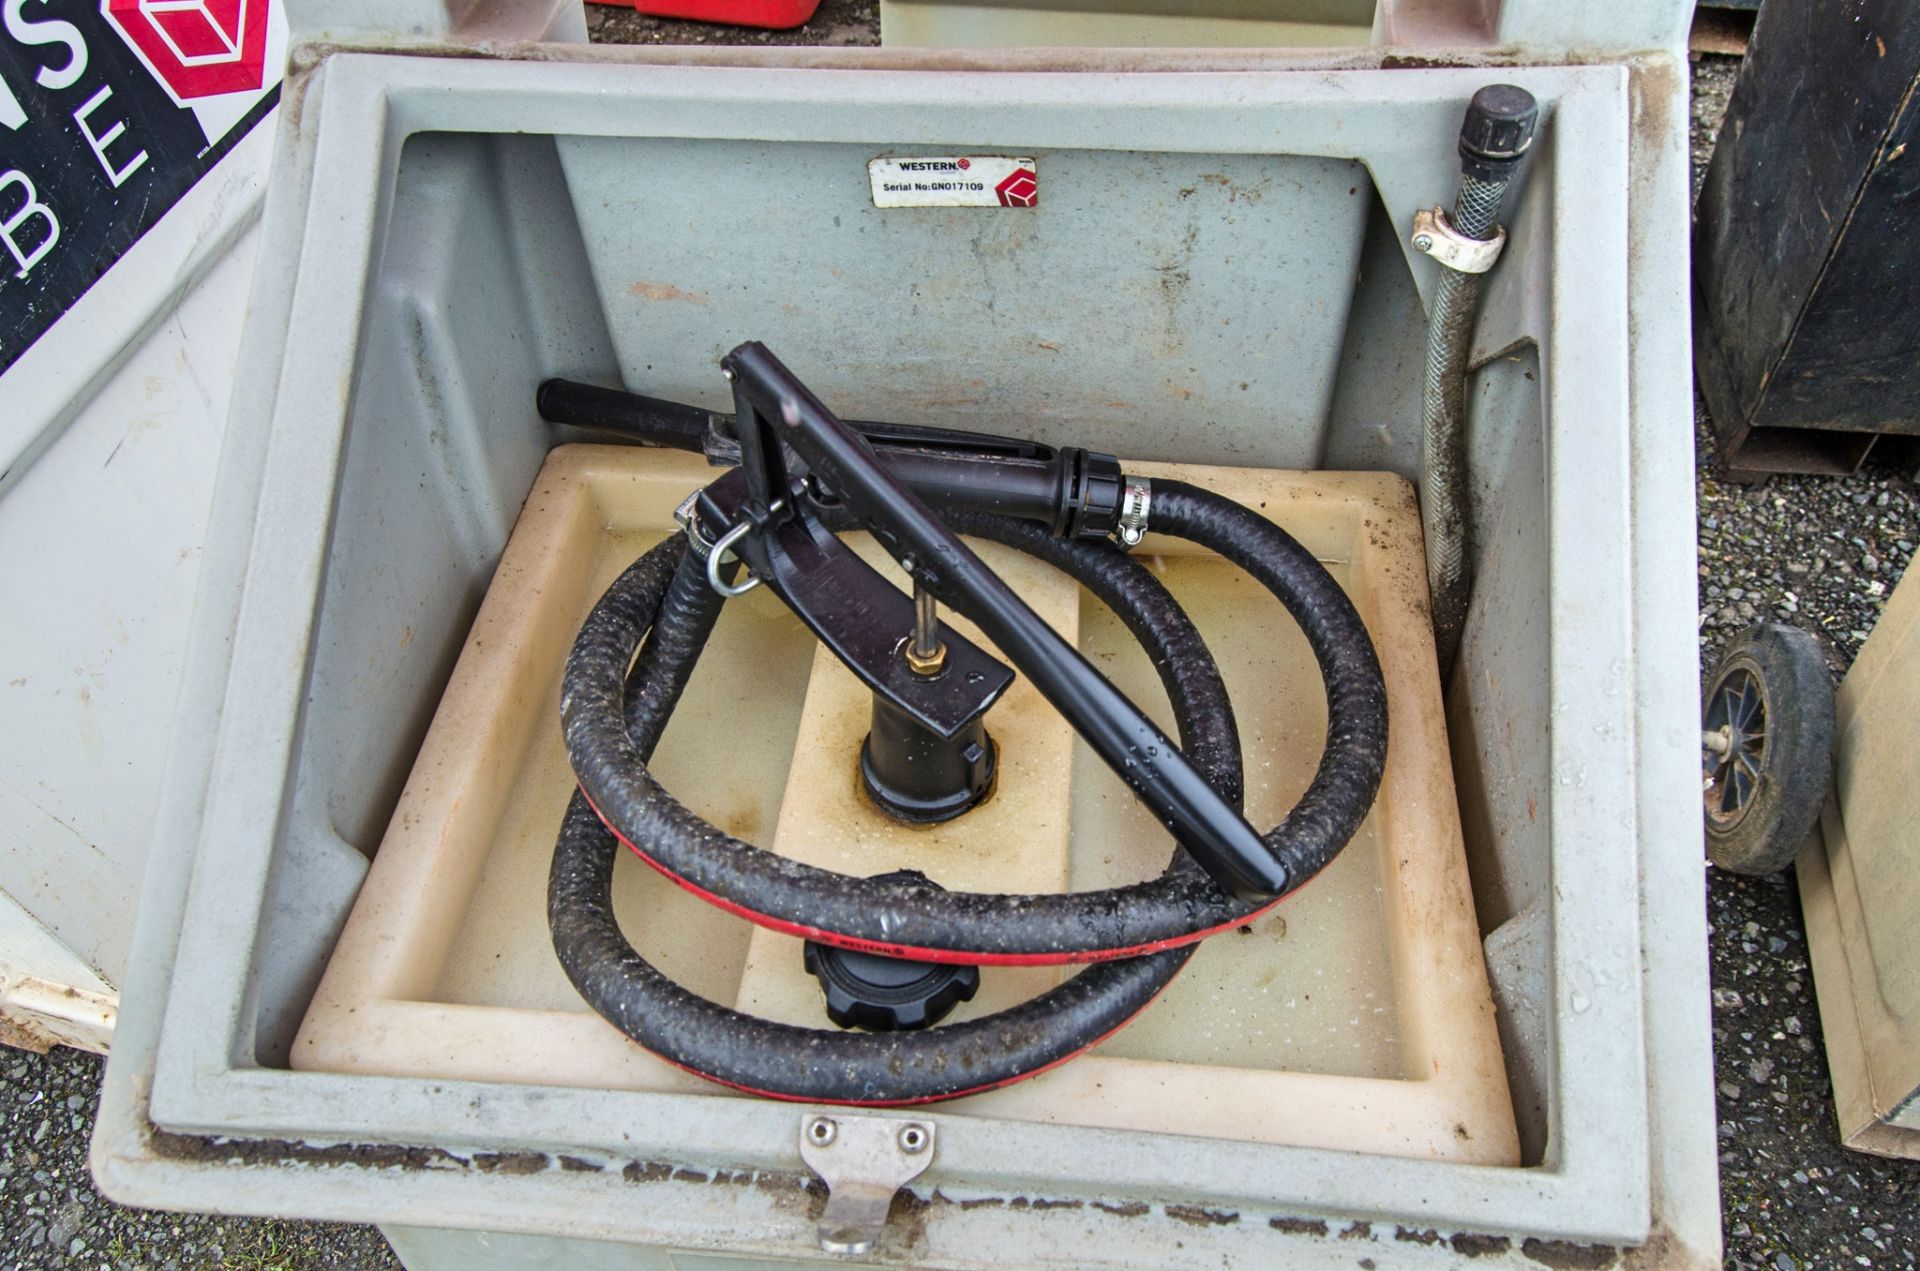 Western Kaddi 100 litre bunded fuel bowser c/w manual pump, delivery hose & nozzle 1706WST007 - Image 2 of 2